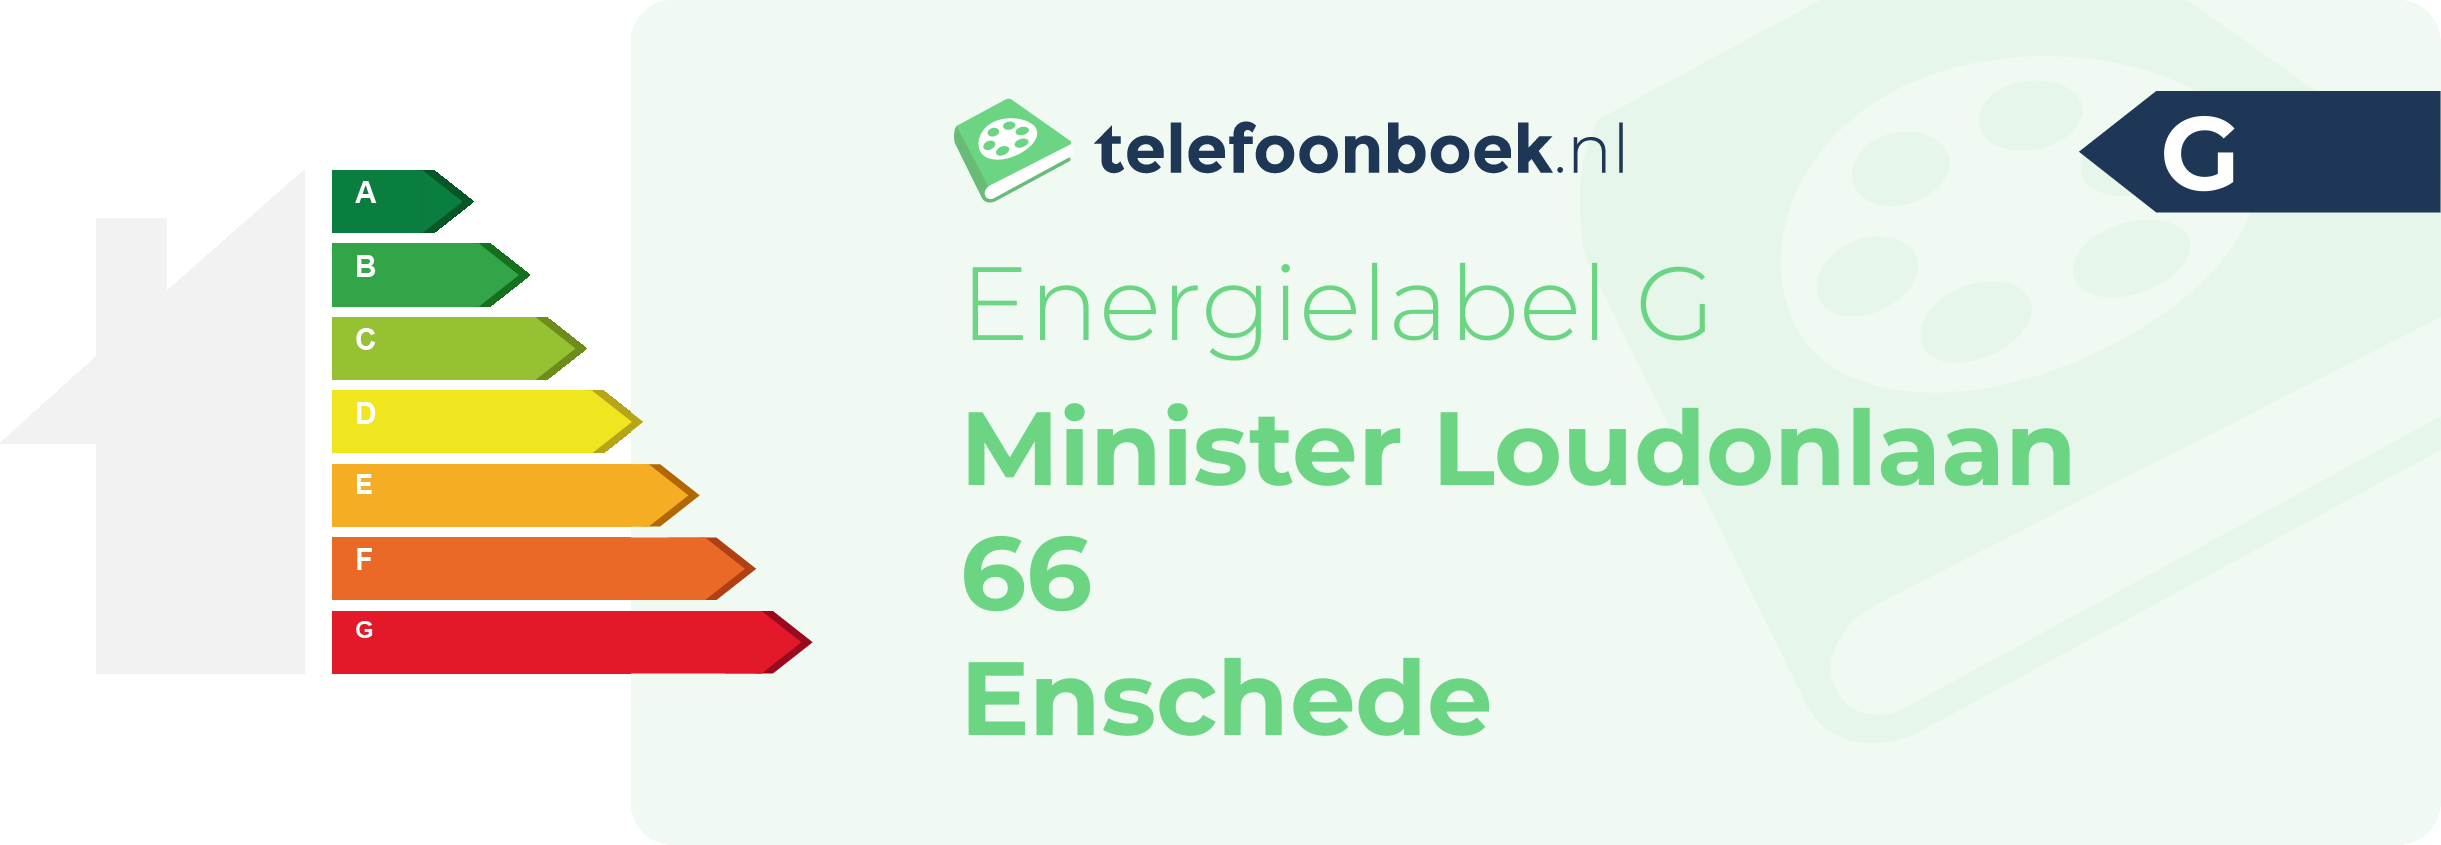 Energielabel Minister Loudonlaan 66 Enschede